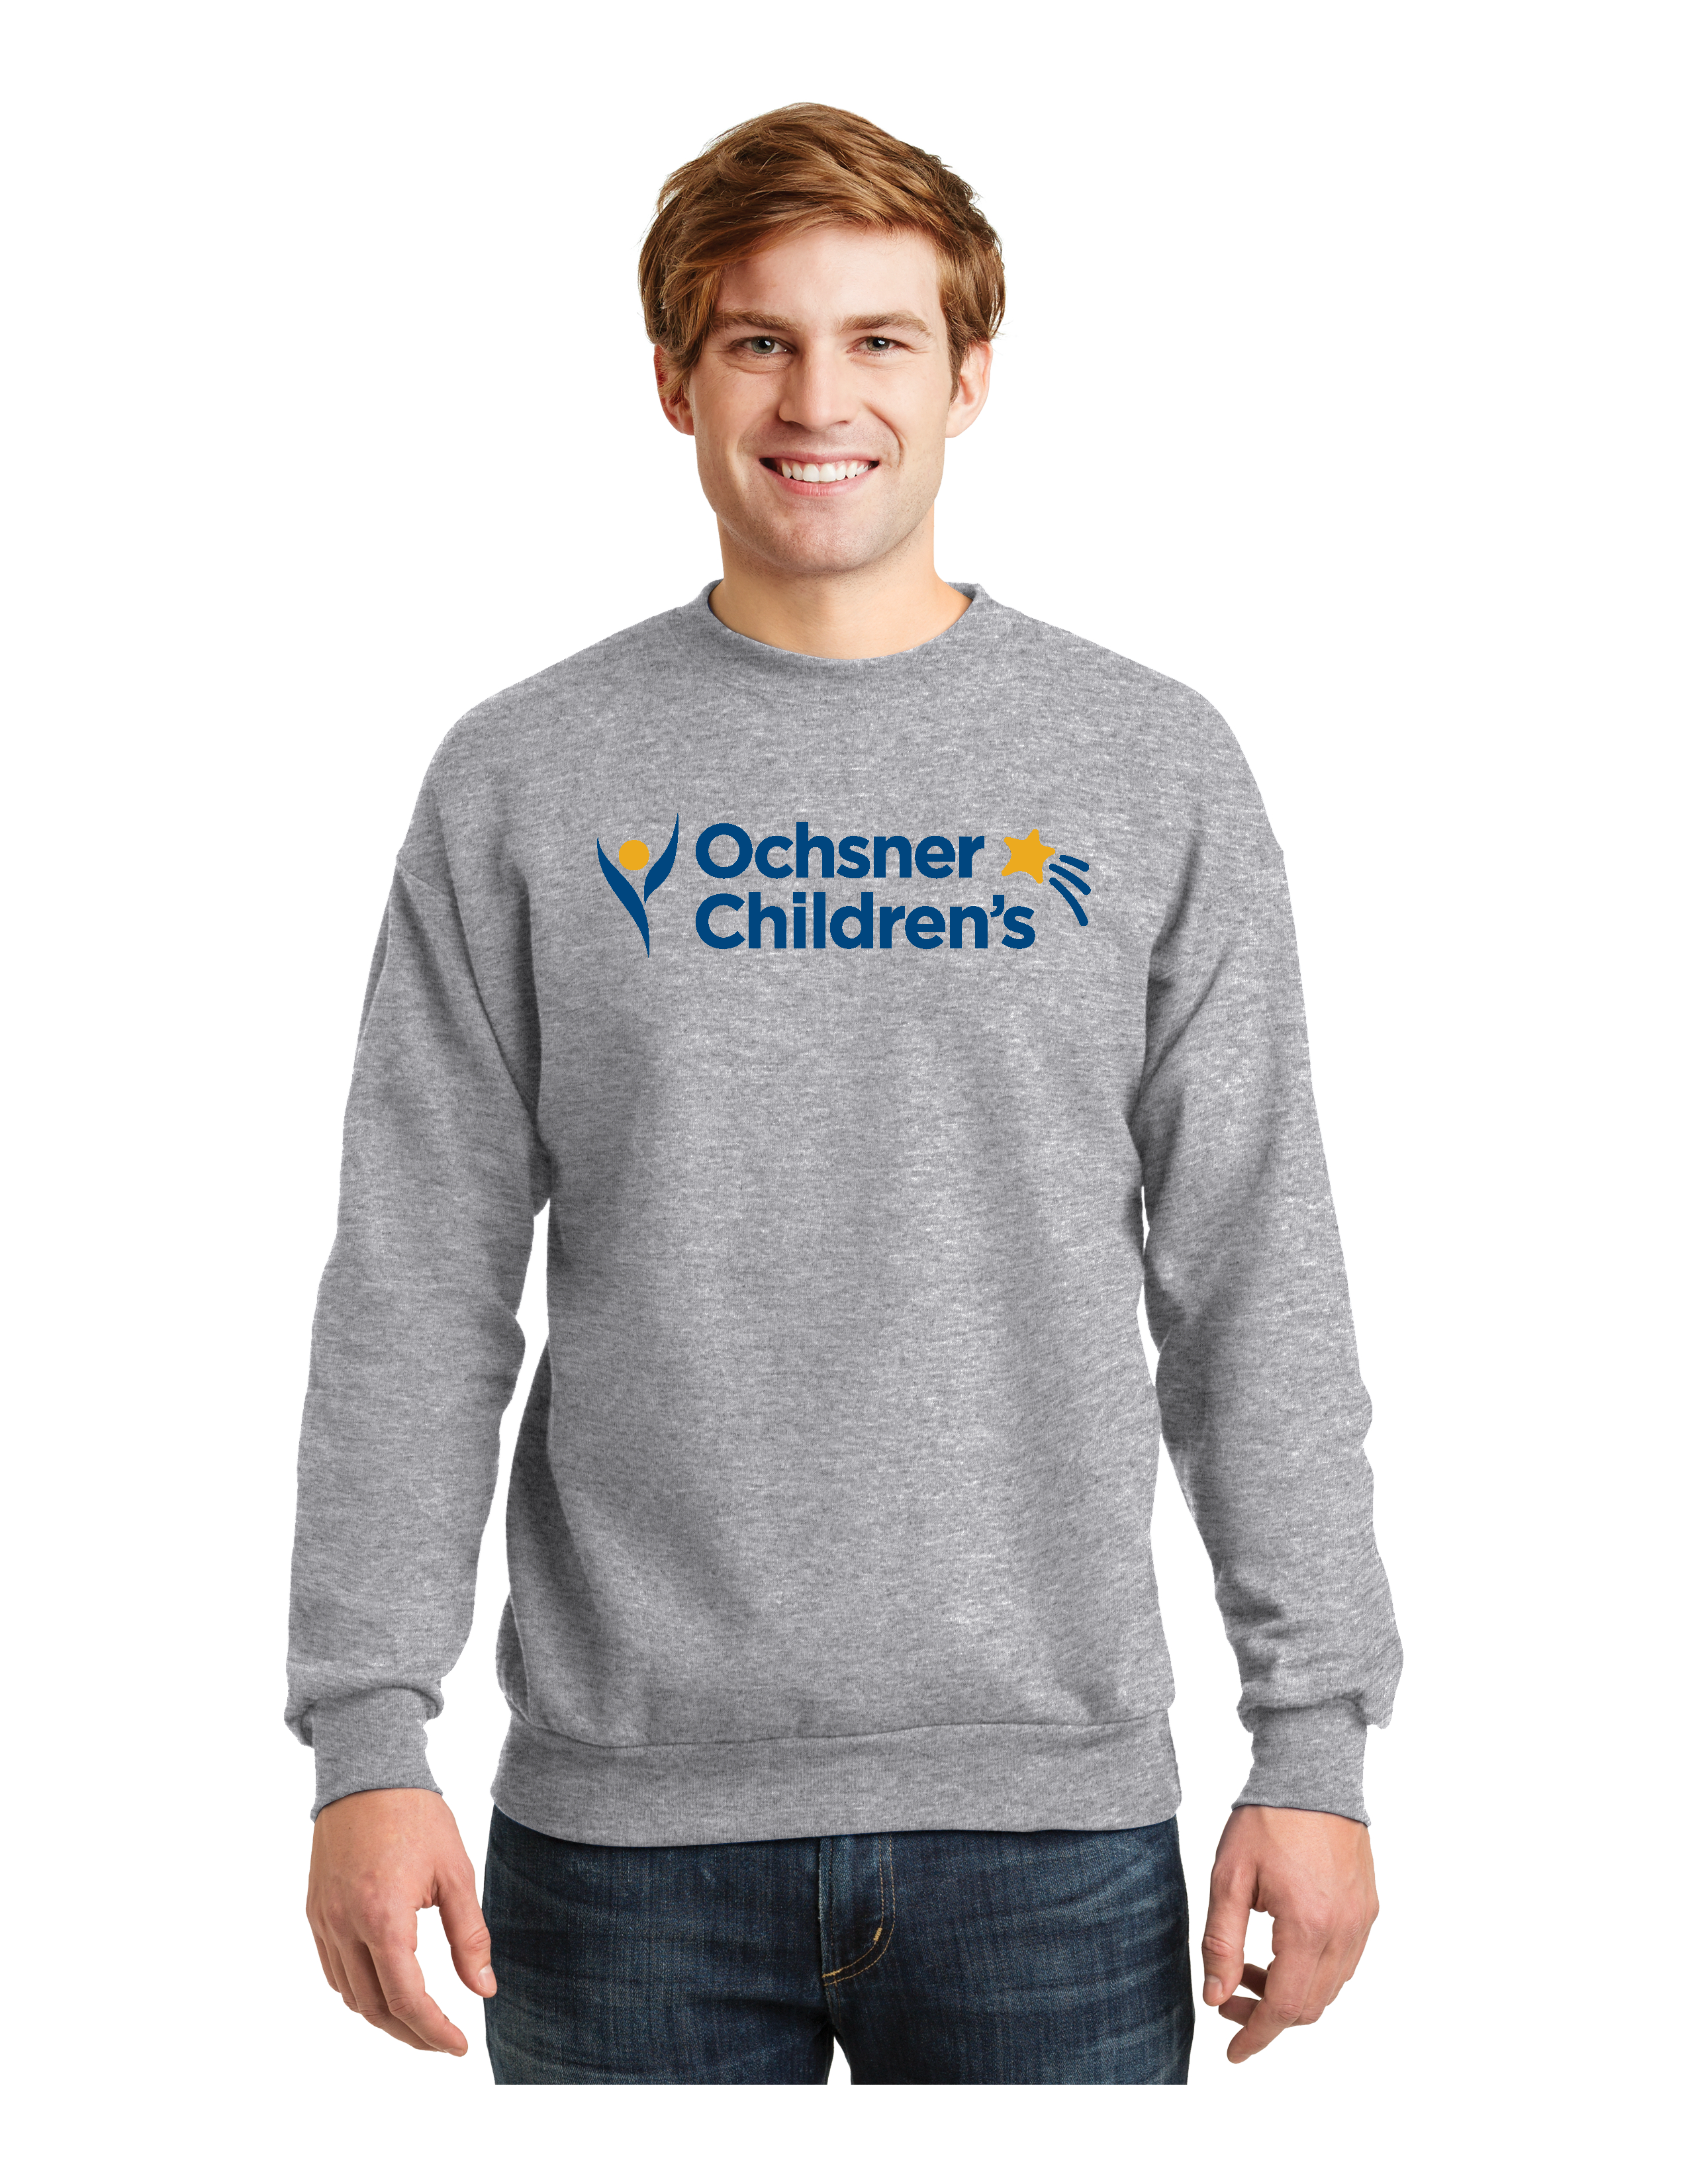 Ochsner Children's Screen-Print Sweatshirt, Gray, large image number 1